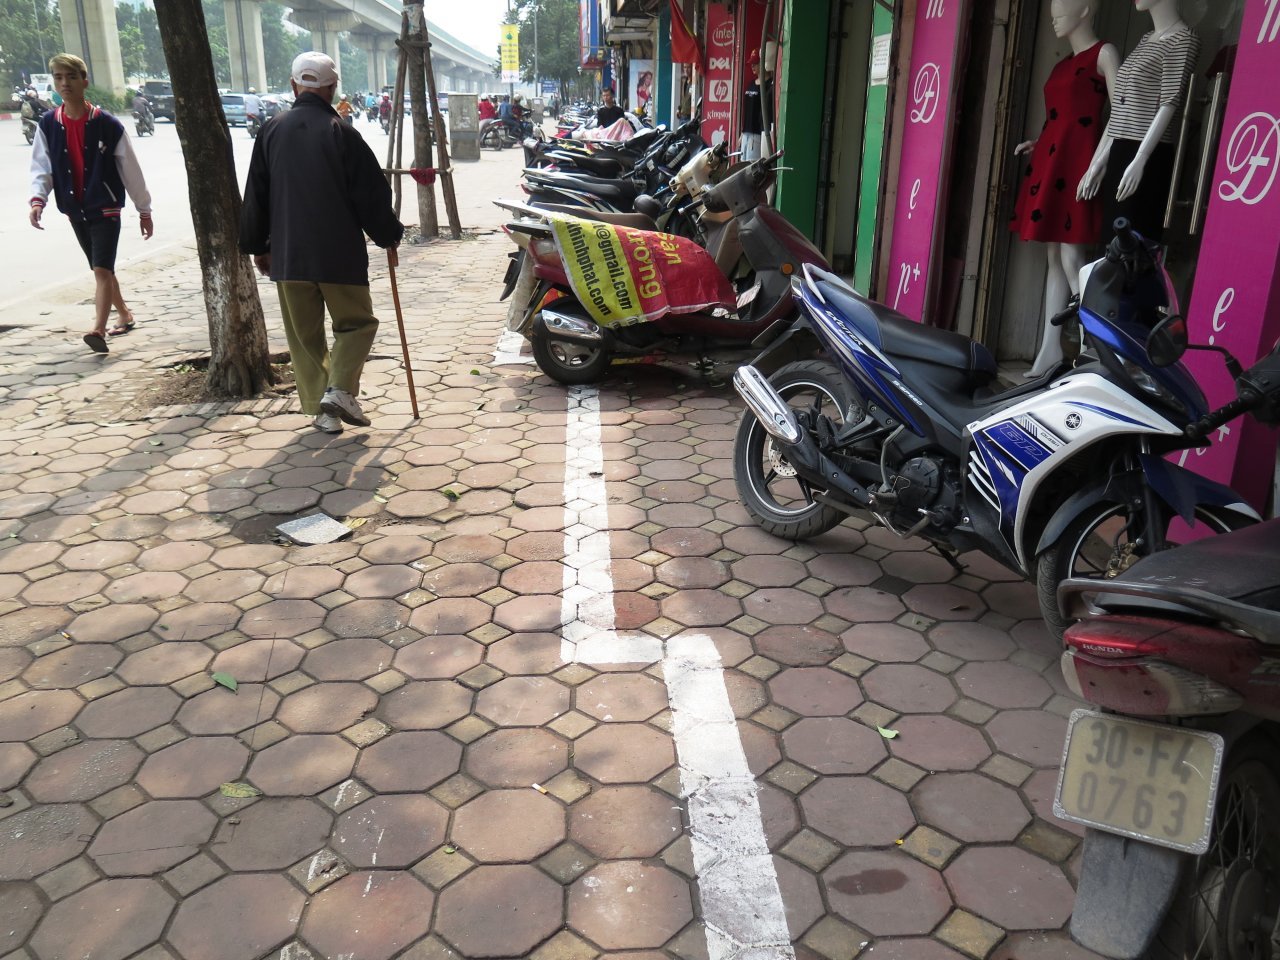 Zigzag sidewalk separation lines create confusion in Hanoi